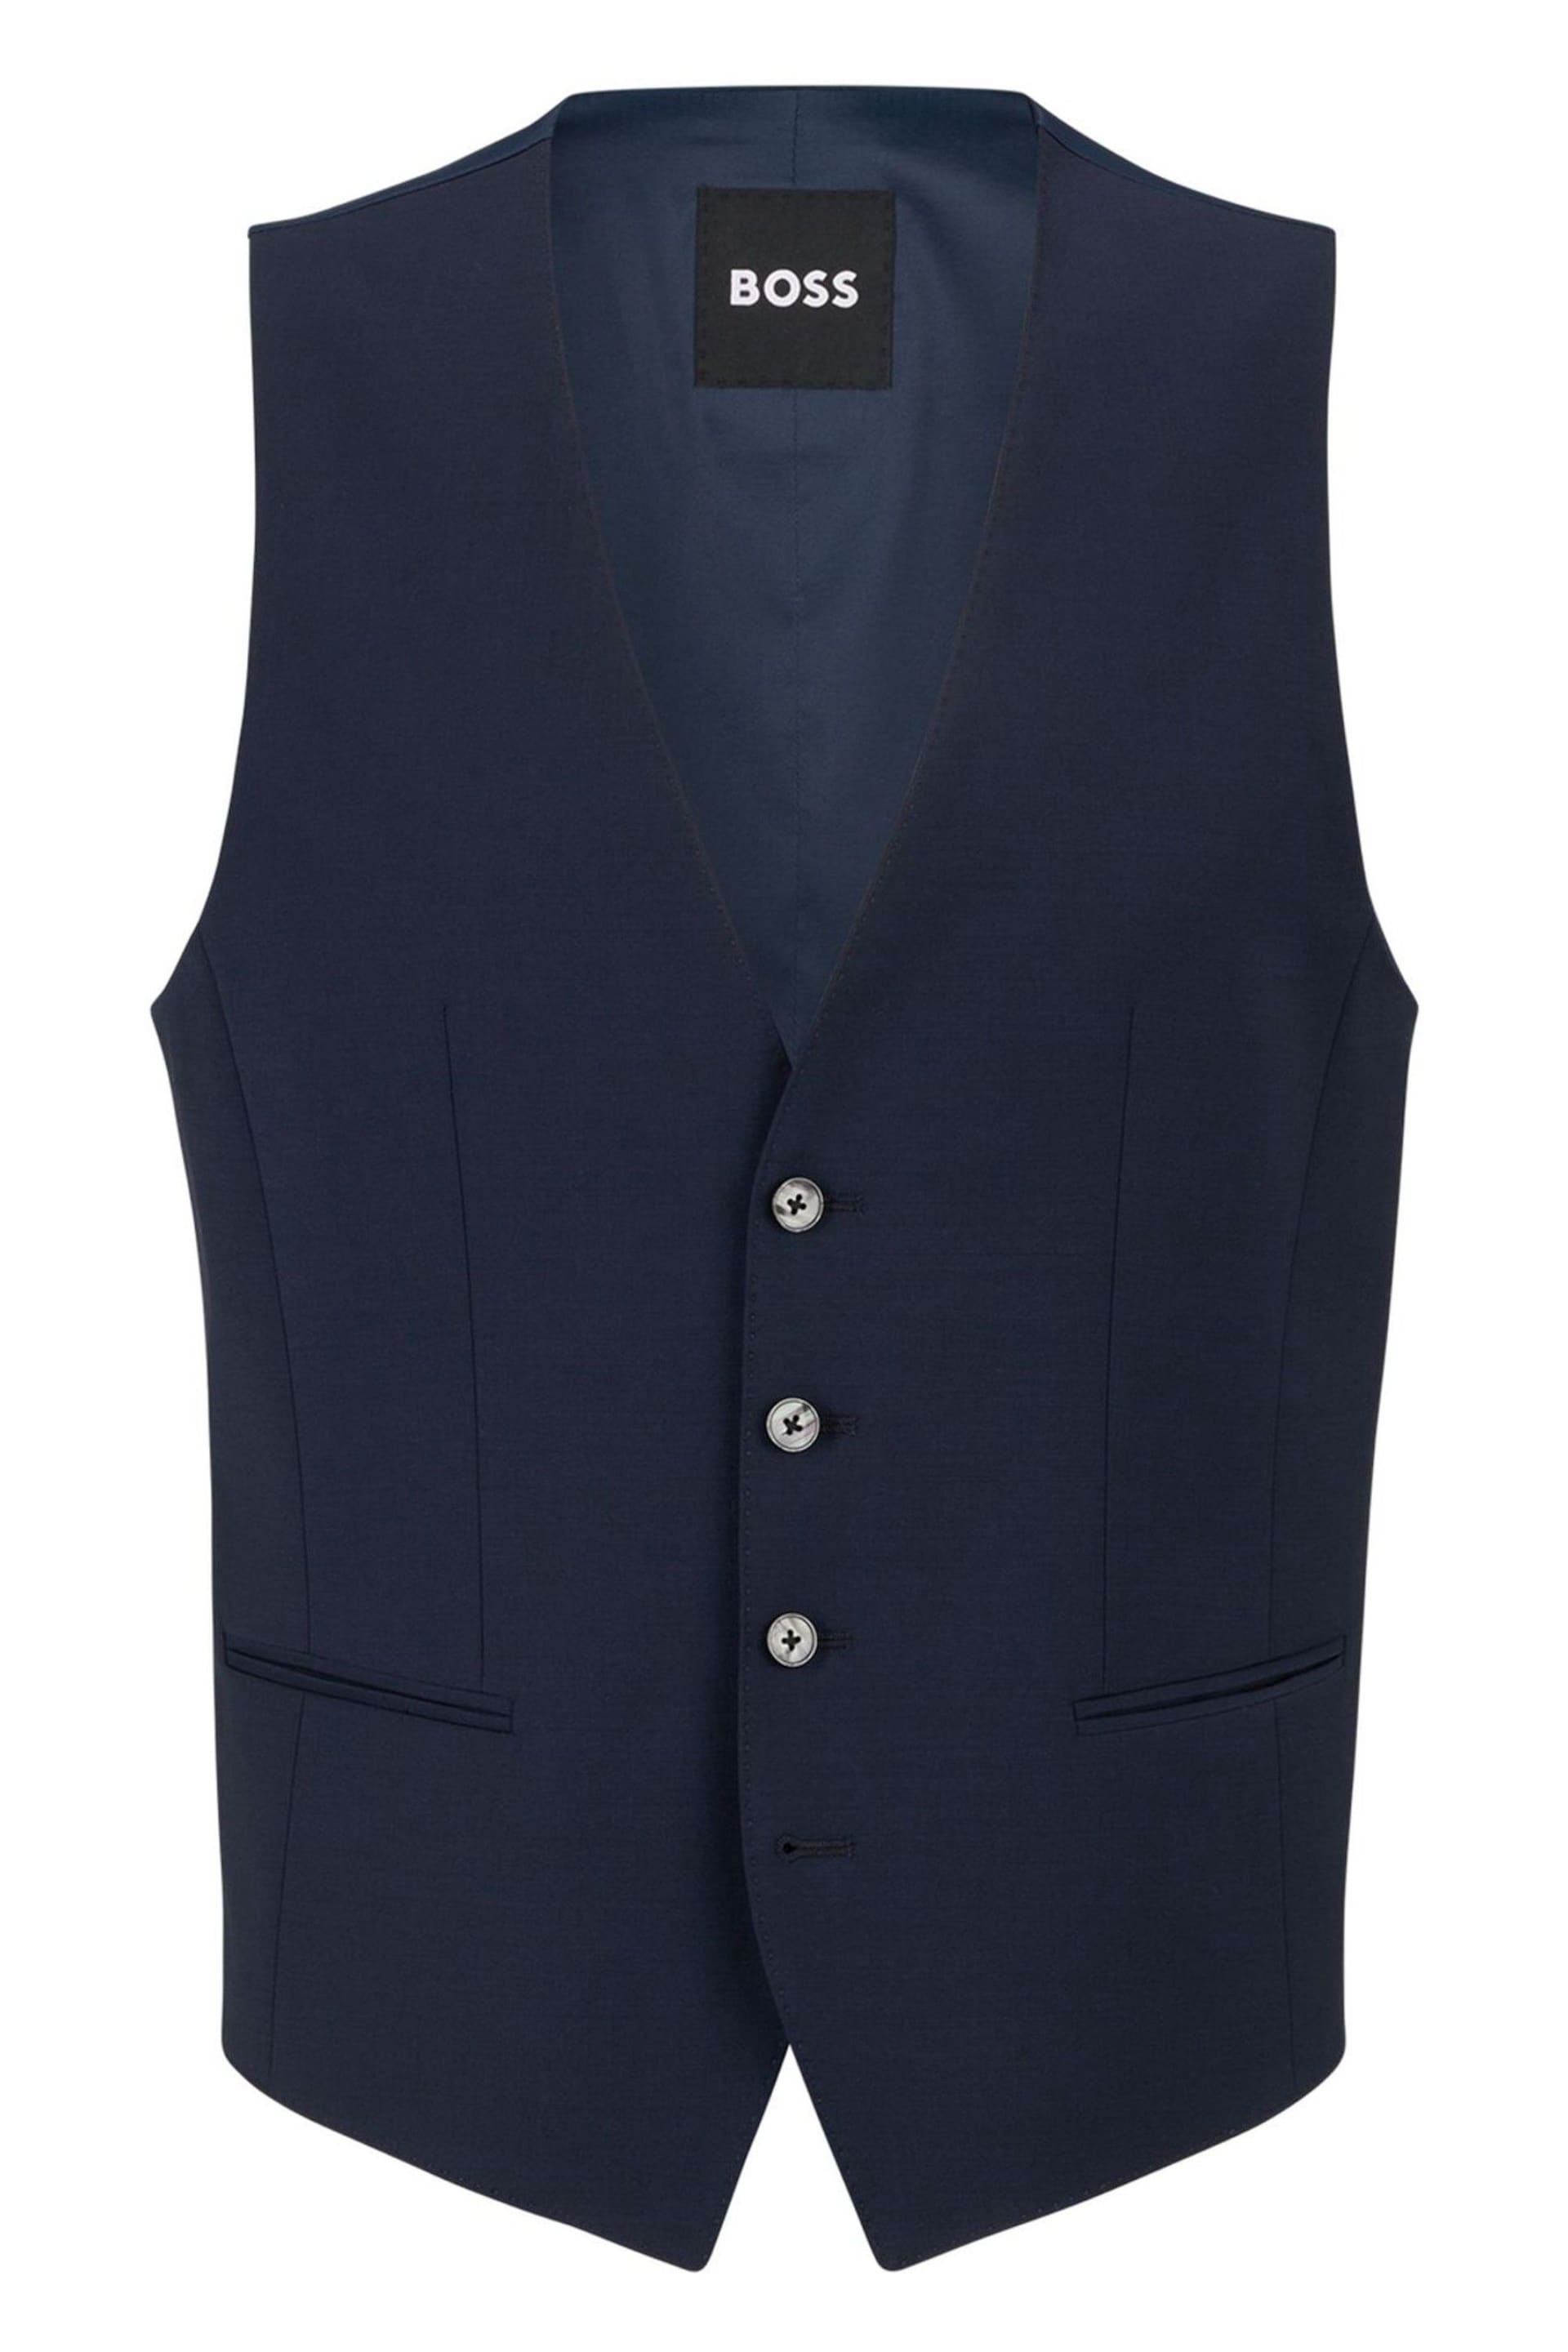 BOSS Blue Slim Fit Wool Blend Waistcoat - Image 5 of 5